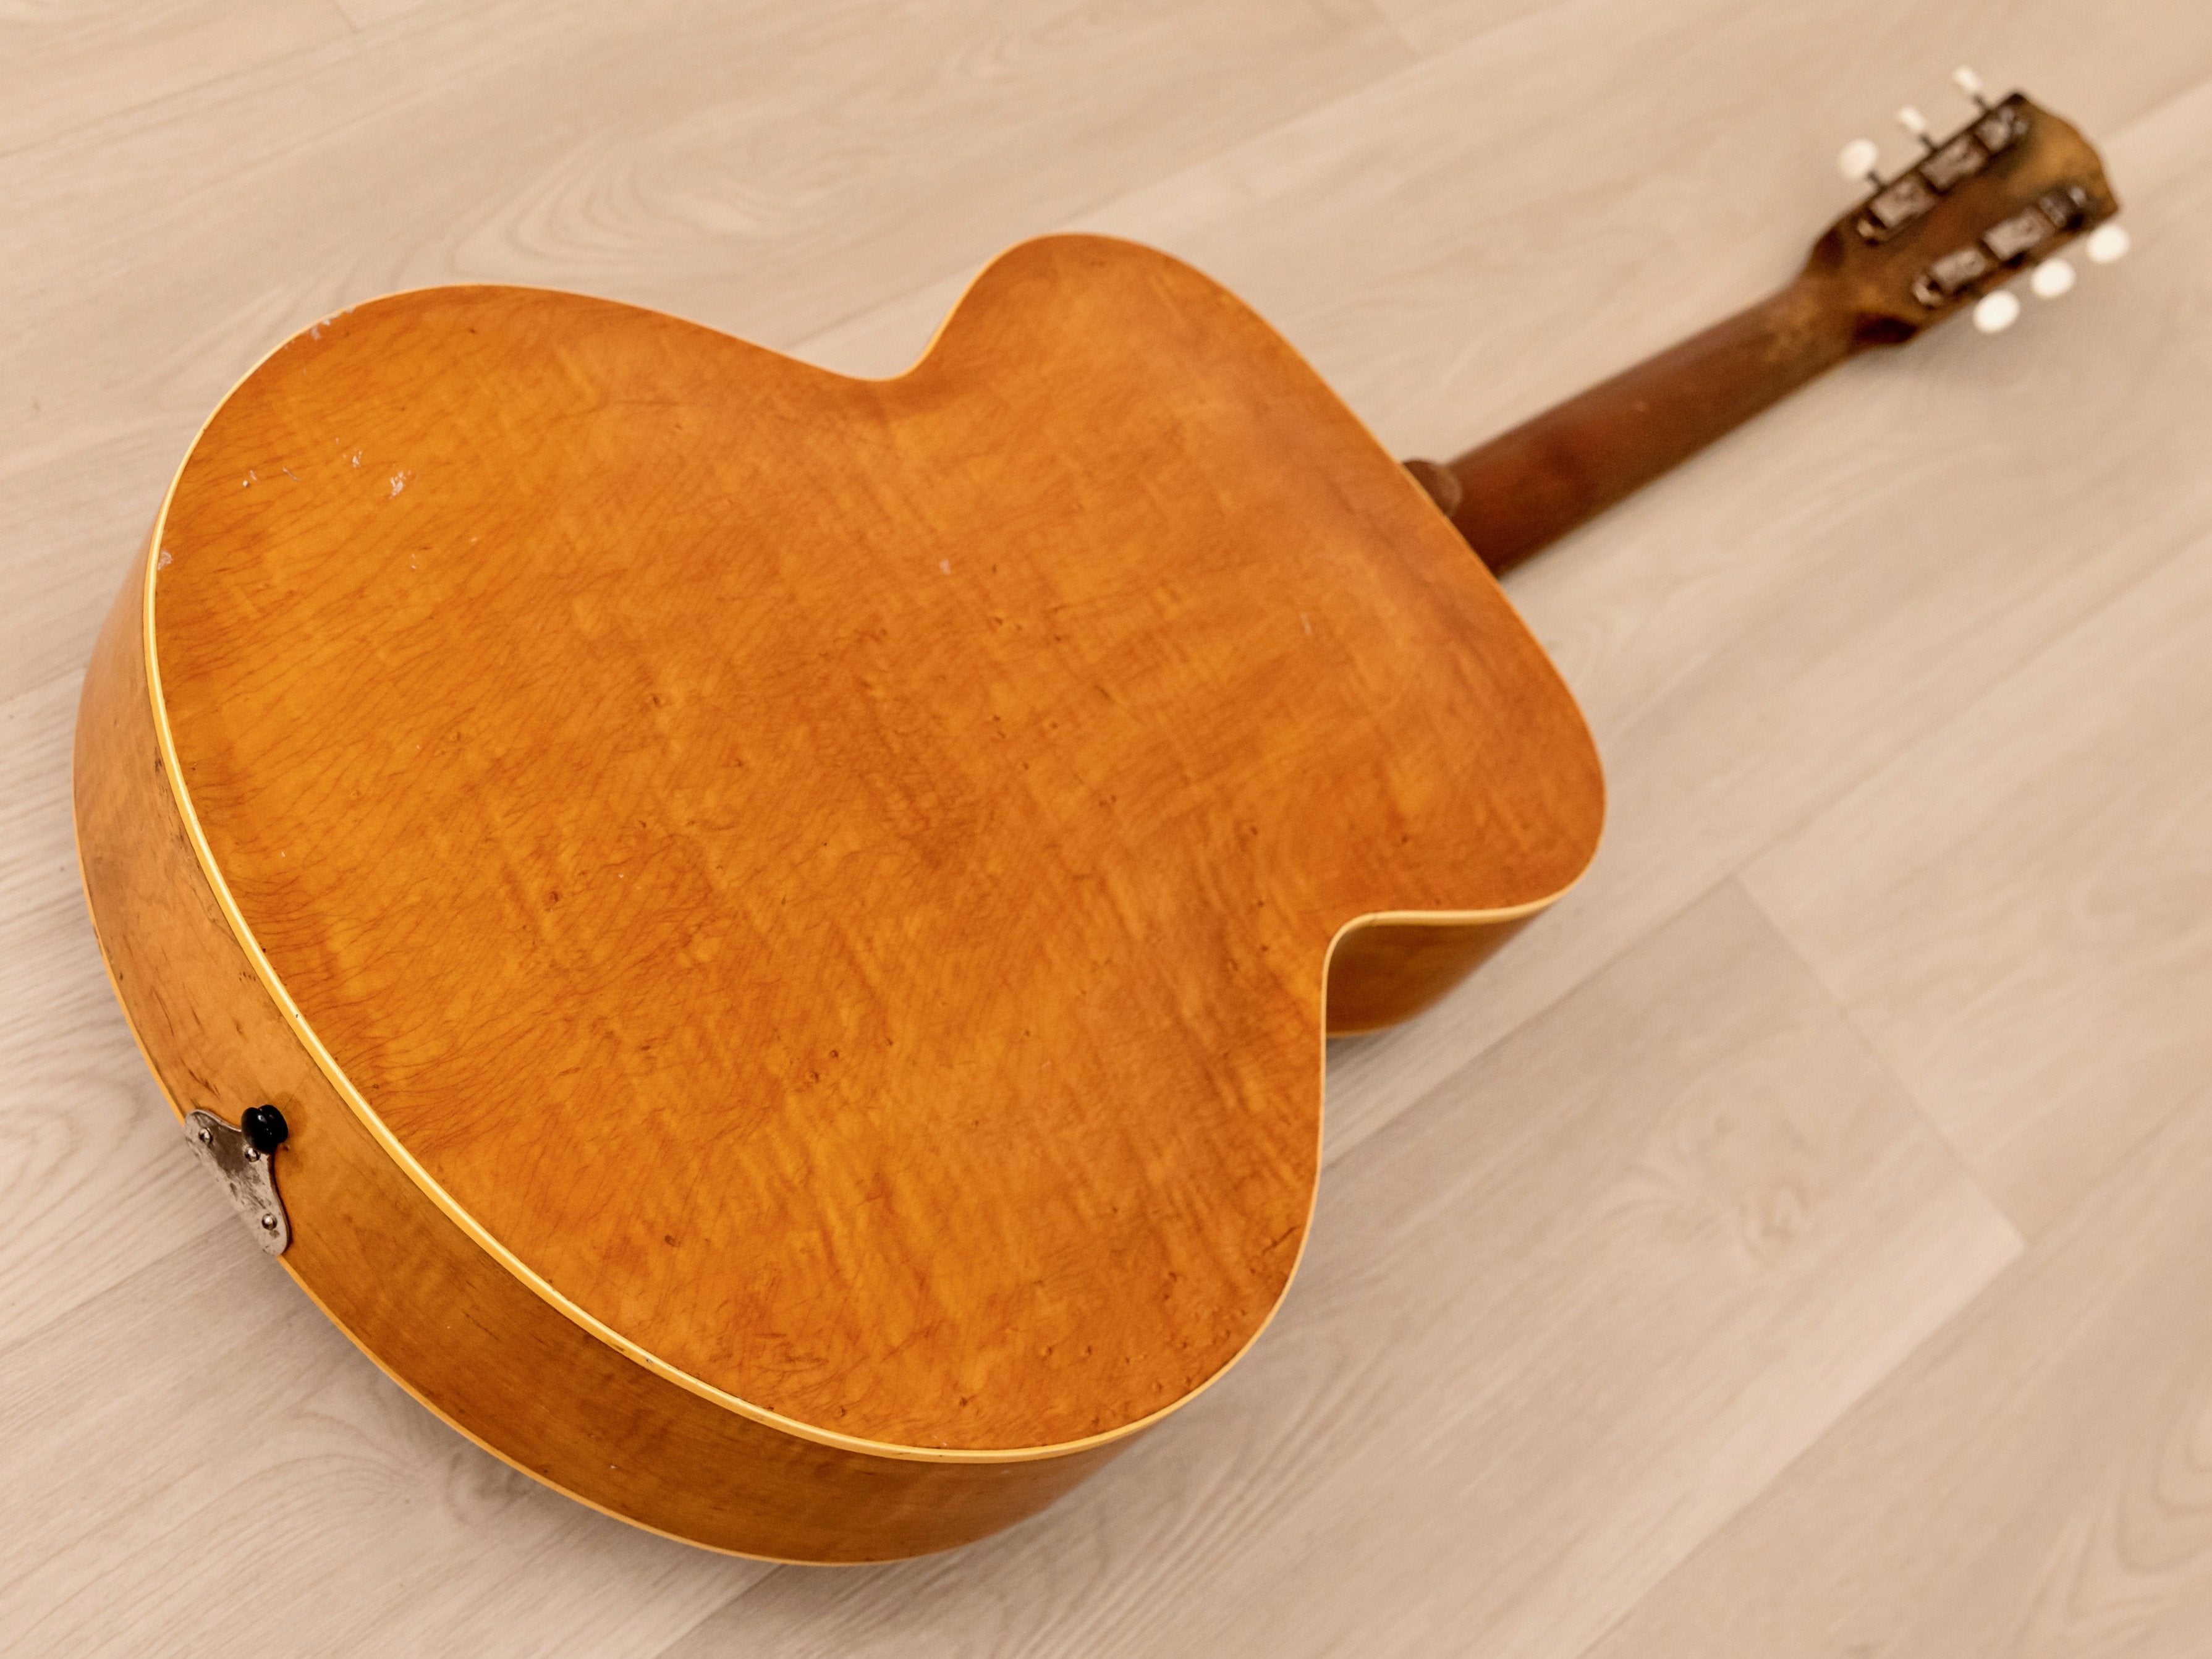 1950 Gibson Archtop Vintage 16” Carved Top Blonde w/ Zipper Binding & Case, Kalamazoo KG-32